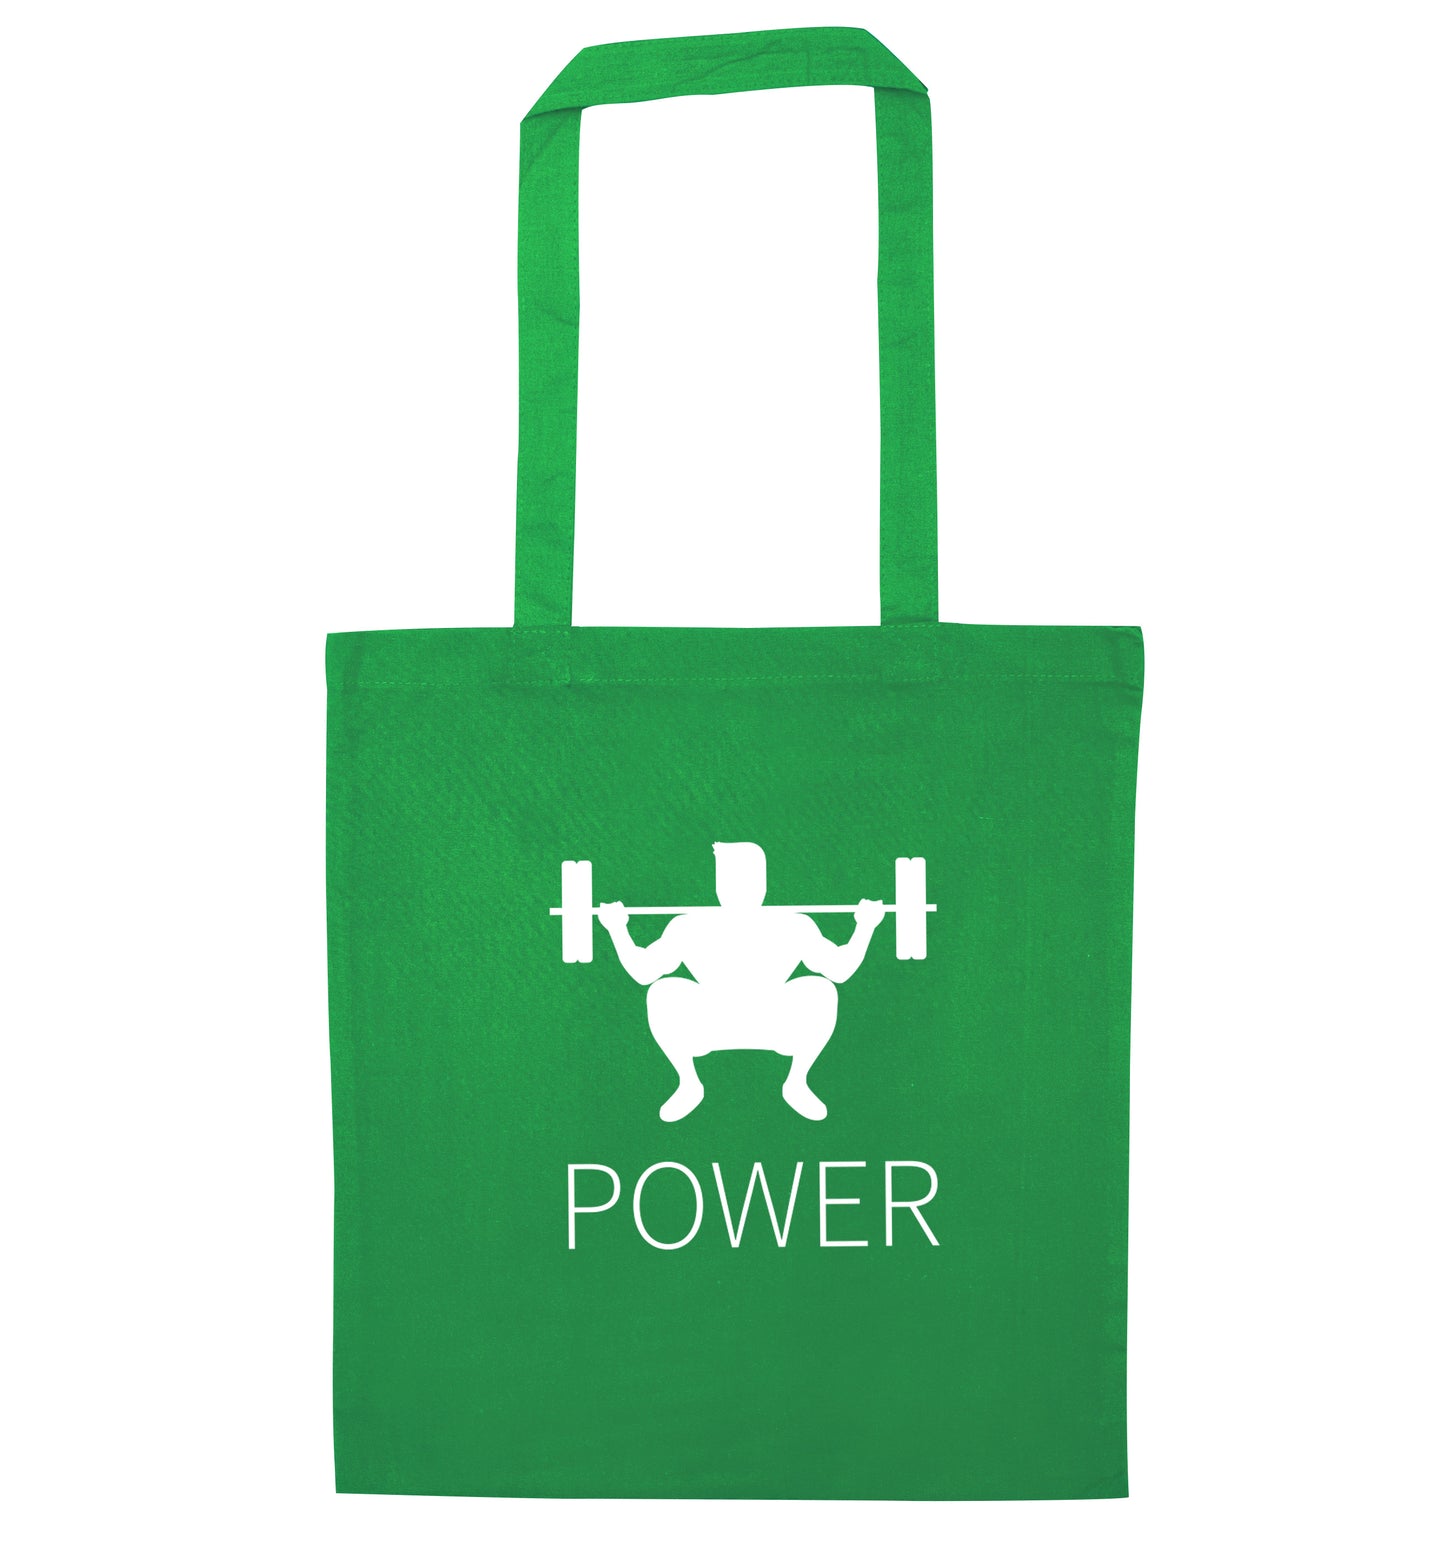 Lift power green tote bag